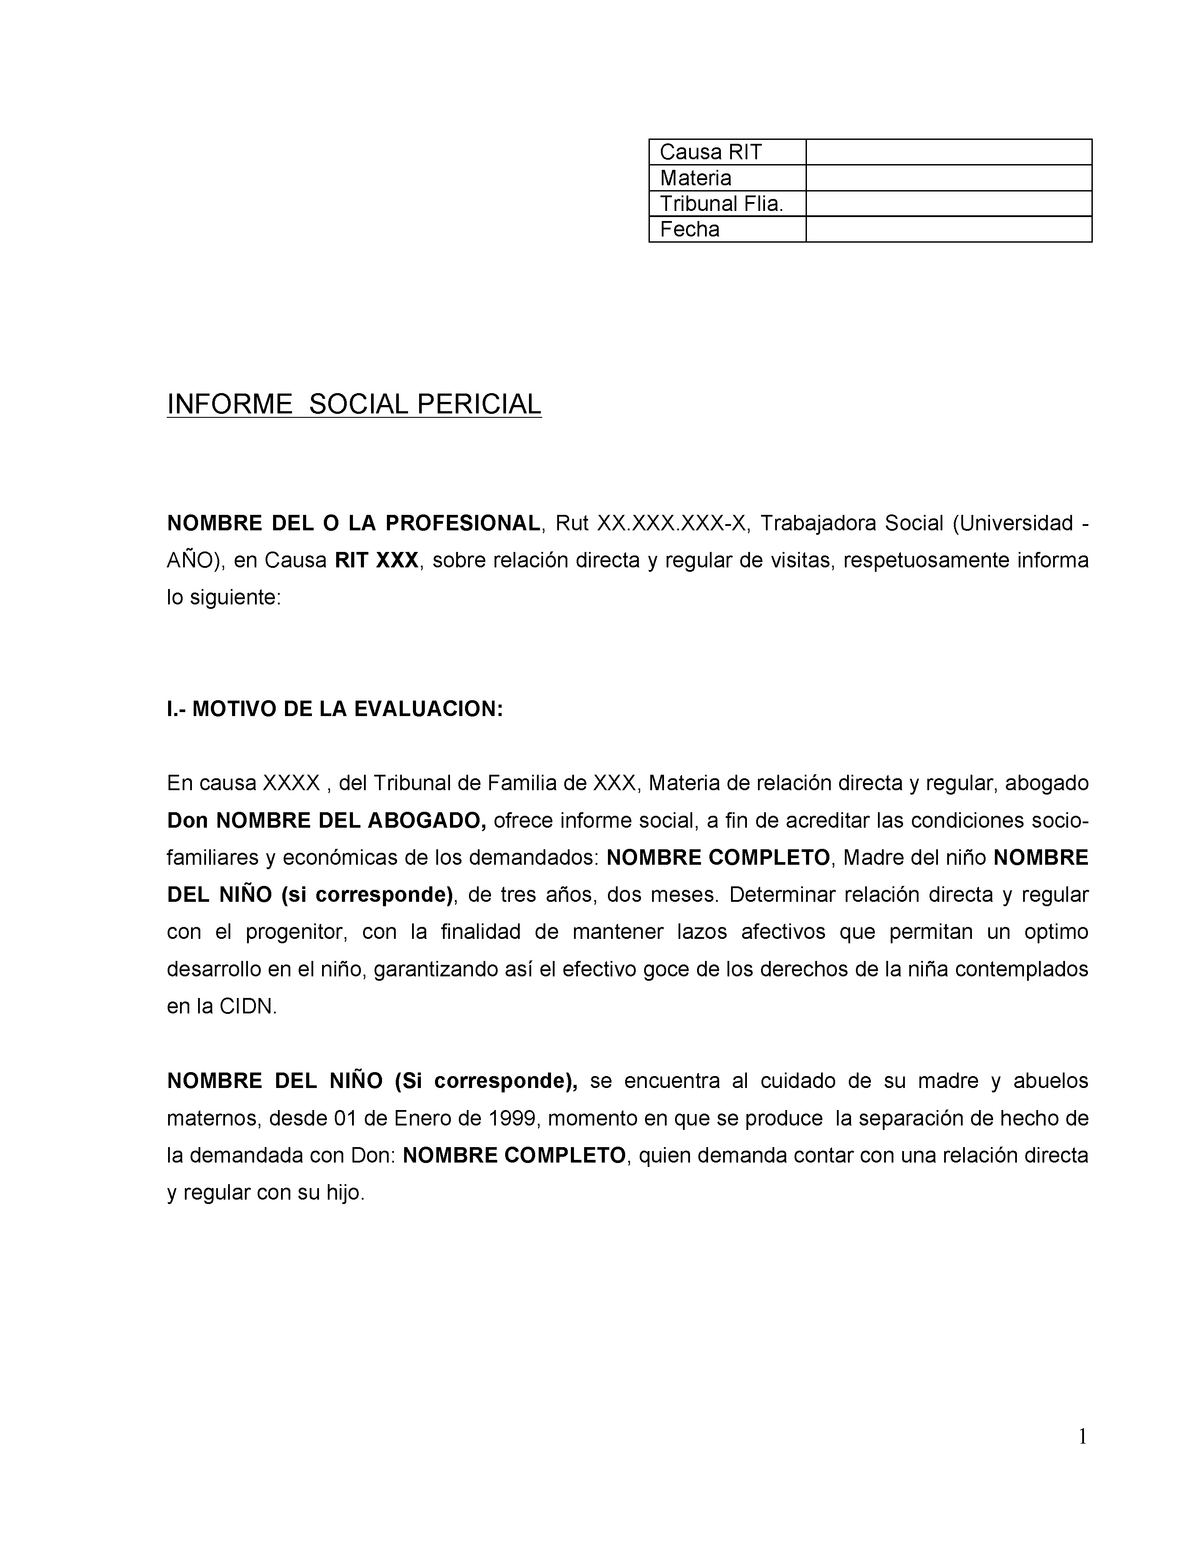 Ejemplo Informe Social Pericial Para Trabajo Social Causa Rit Materia